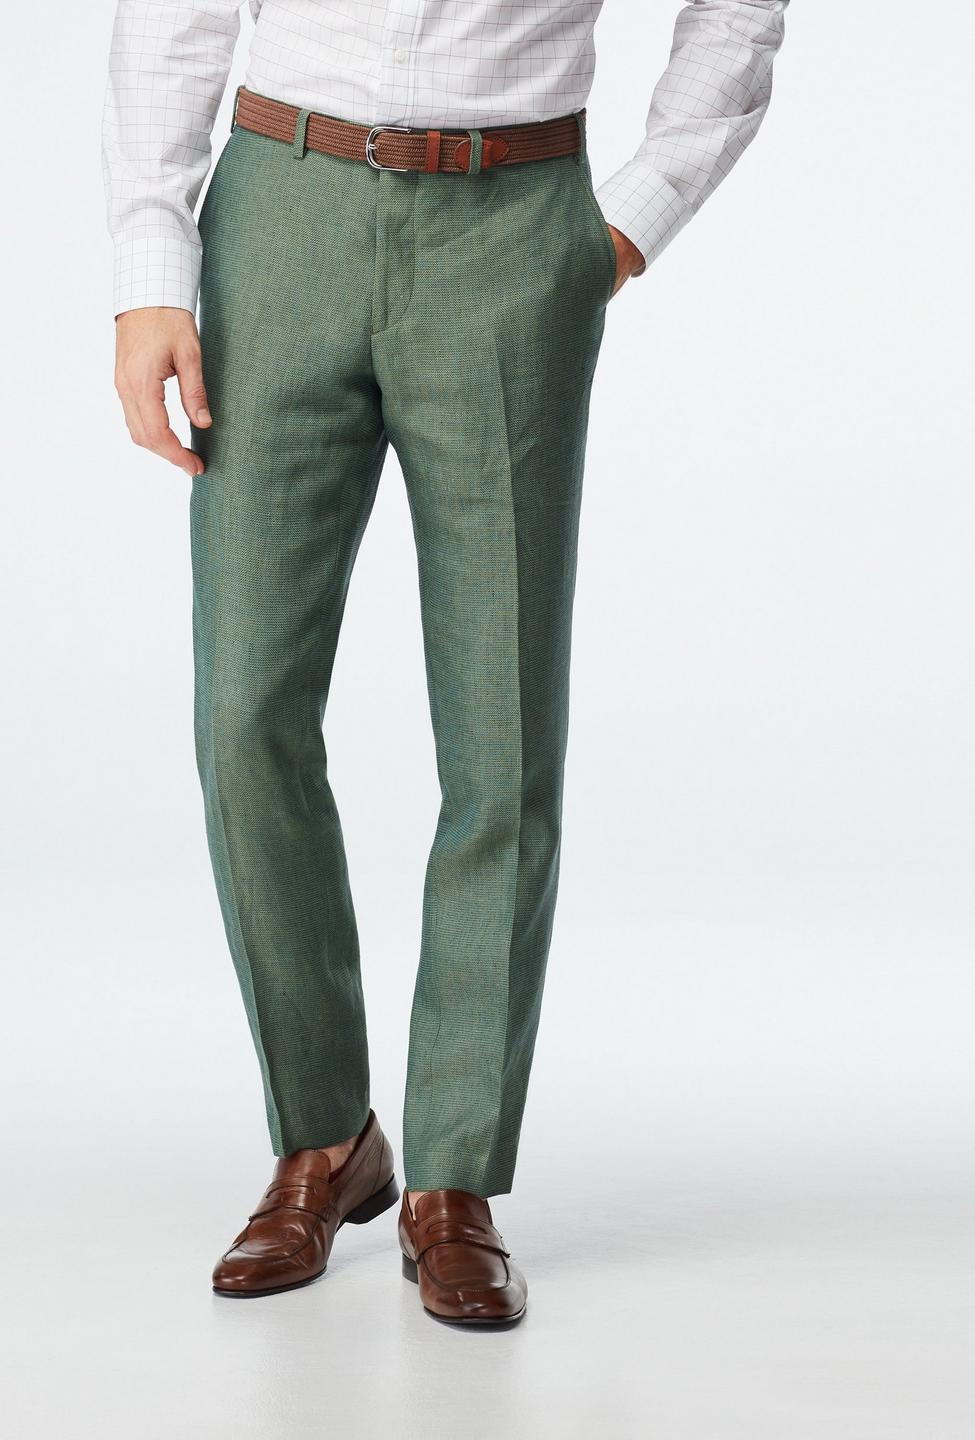 mens green dress pants